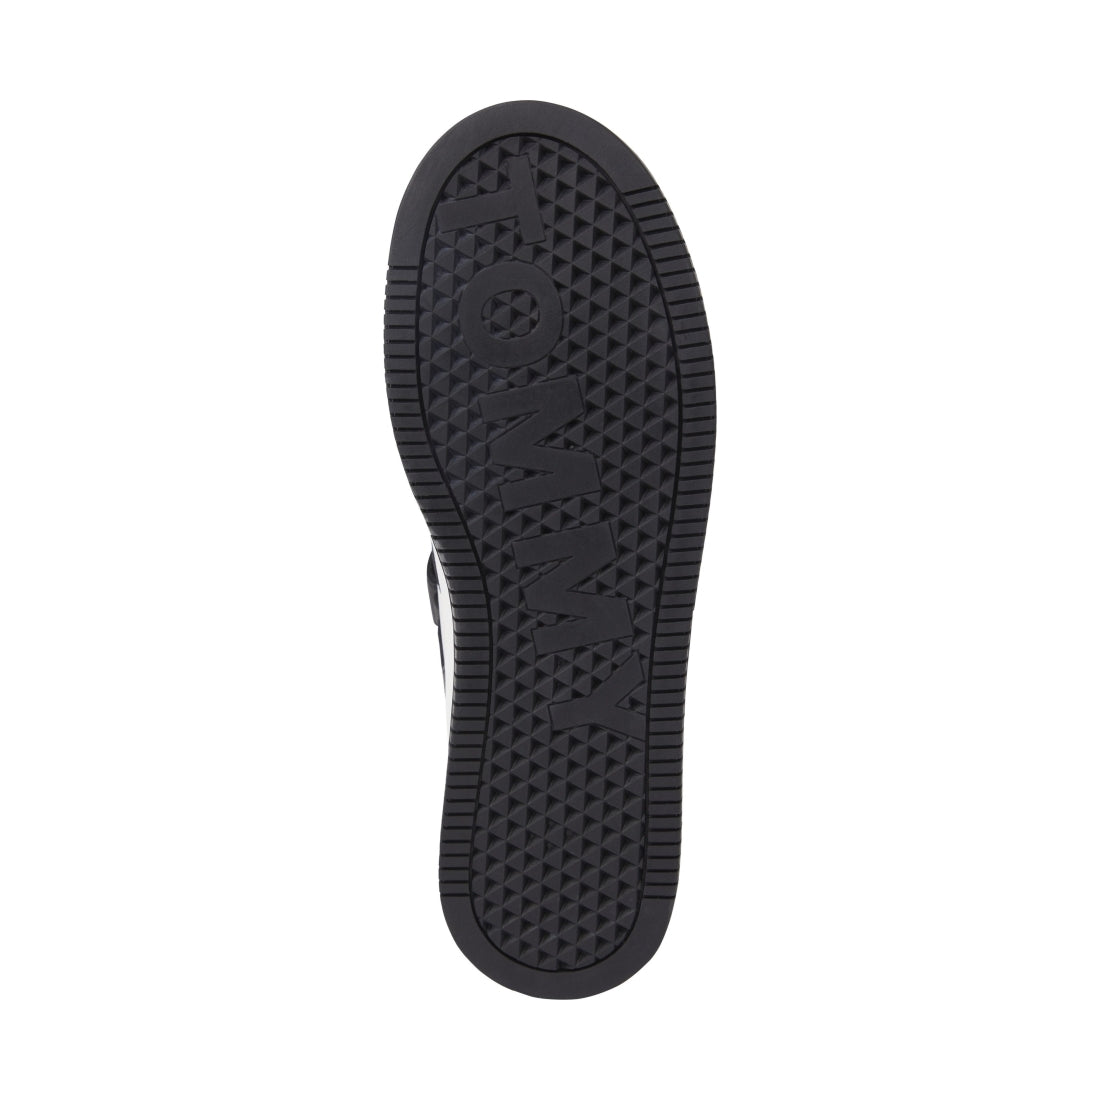 Tommy Jeans womens ecru, black velcro flatform sport shoe | Vilbury London